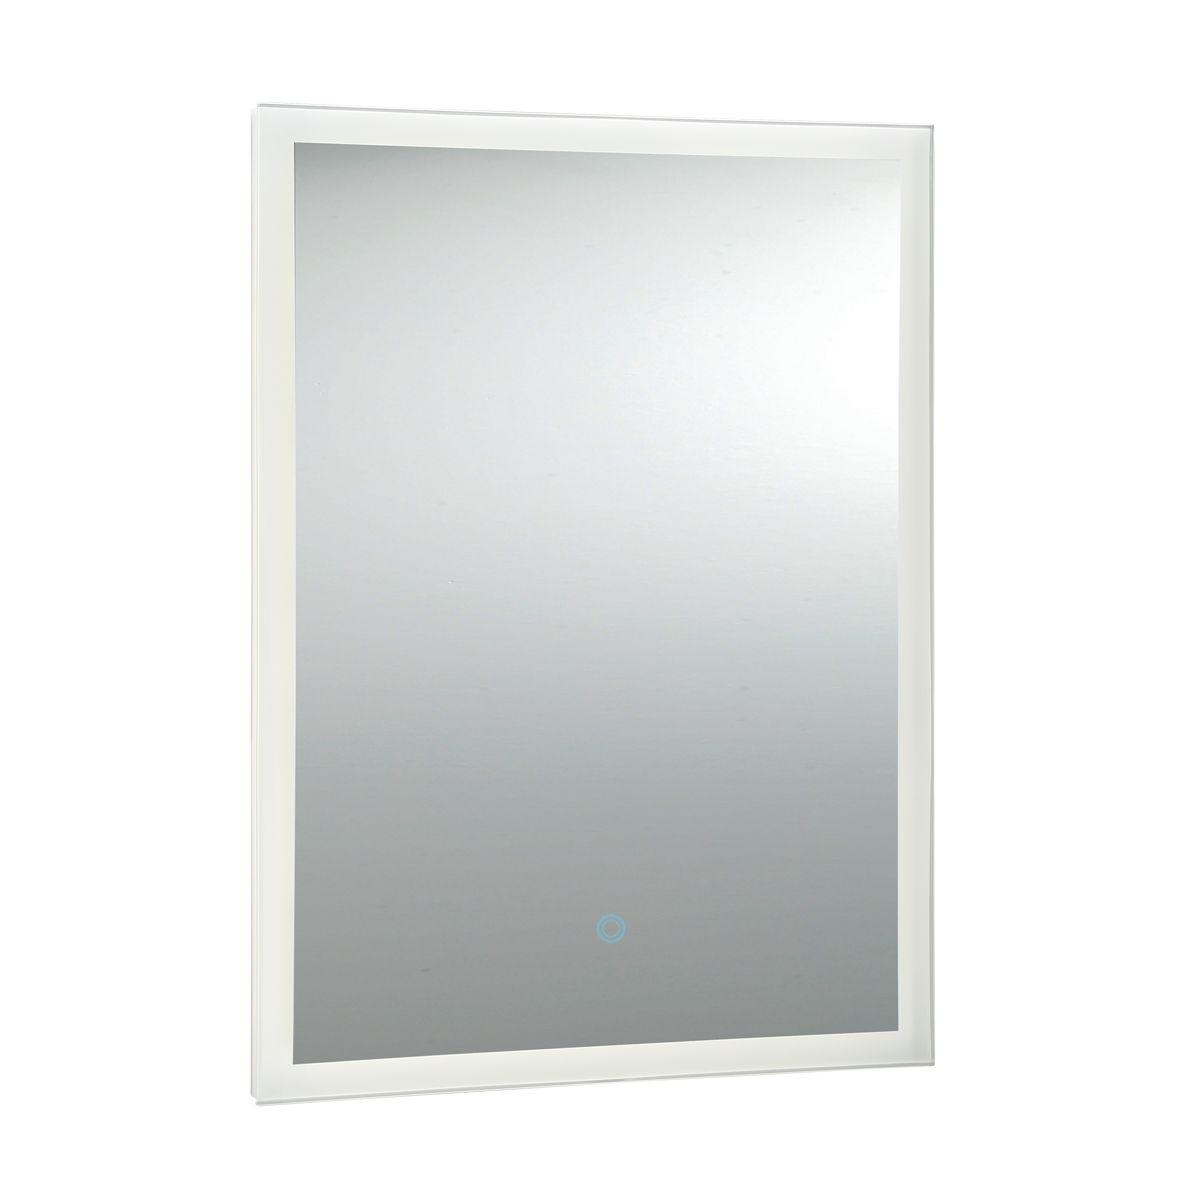 Benji 24 In x 32 In. White LED Wall Mirror